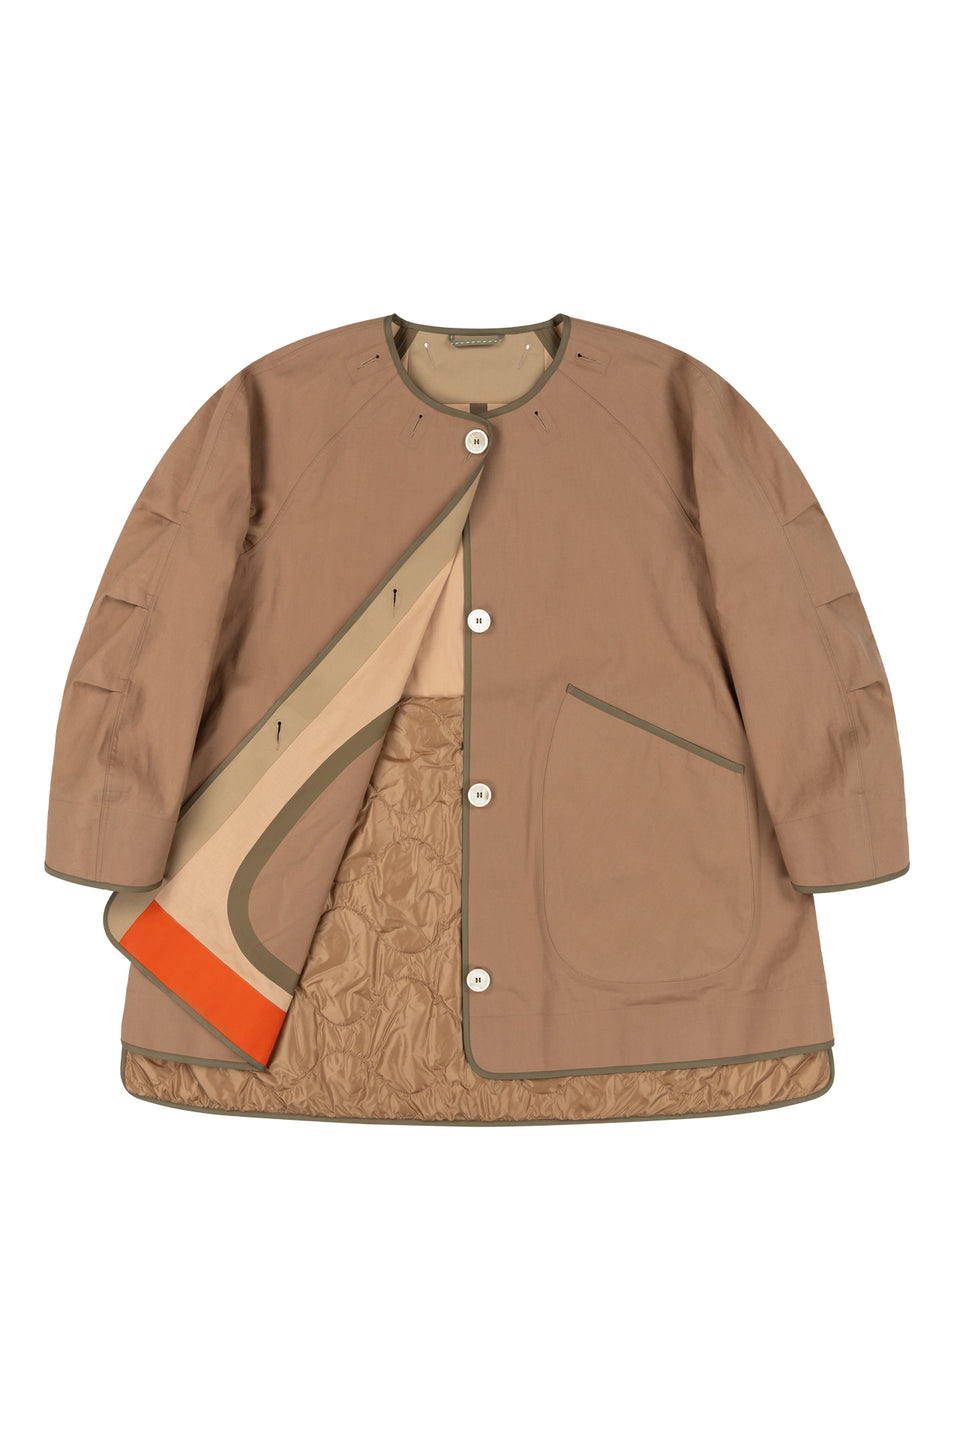 Short Bonded Patchwork Raincoat - Mocha Brown / Soft Peach (listing page thumbnail)